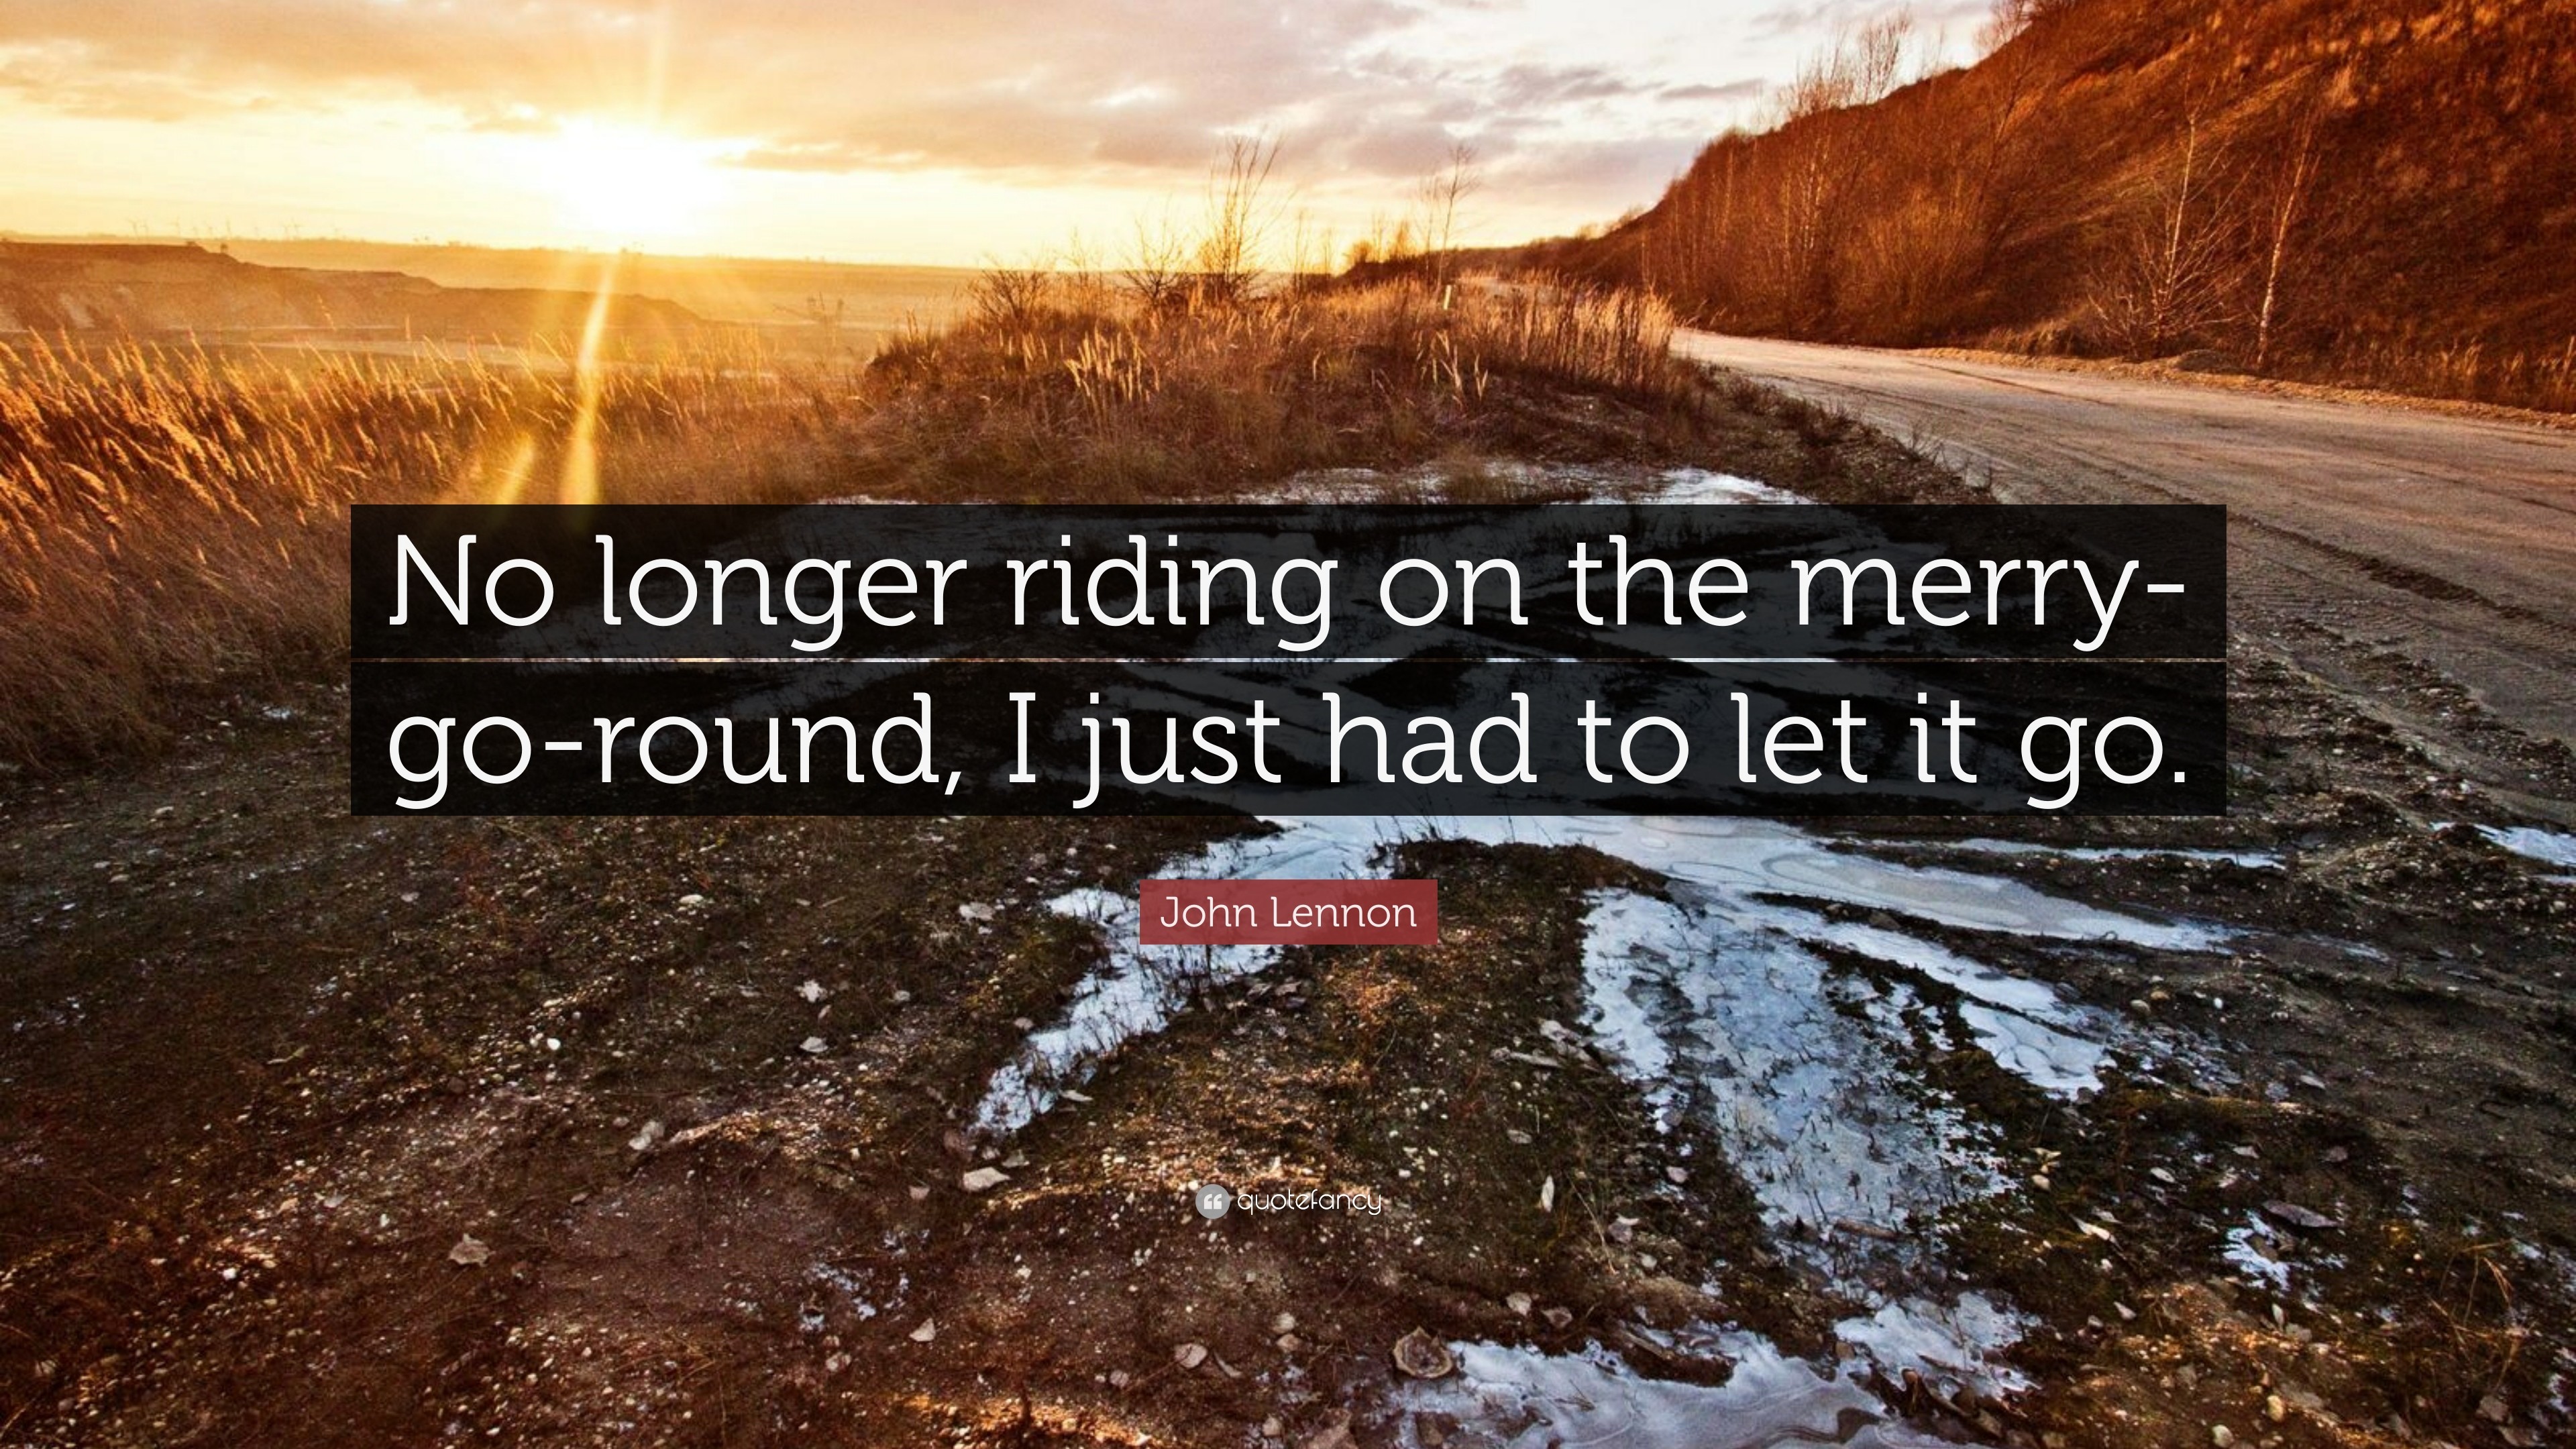 3840x2160 John Lennon Quote: “No longer riding on the merry-go-round,